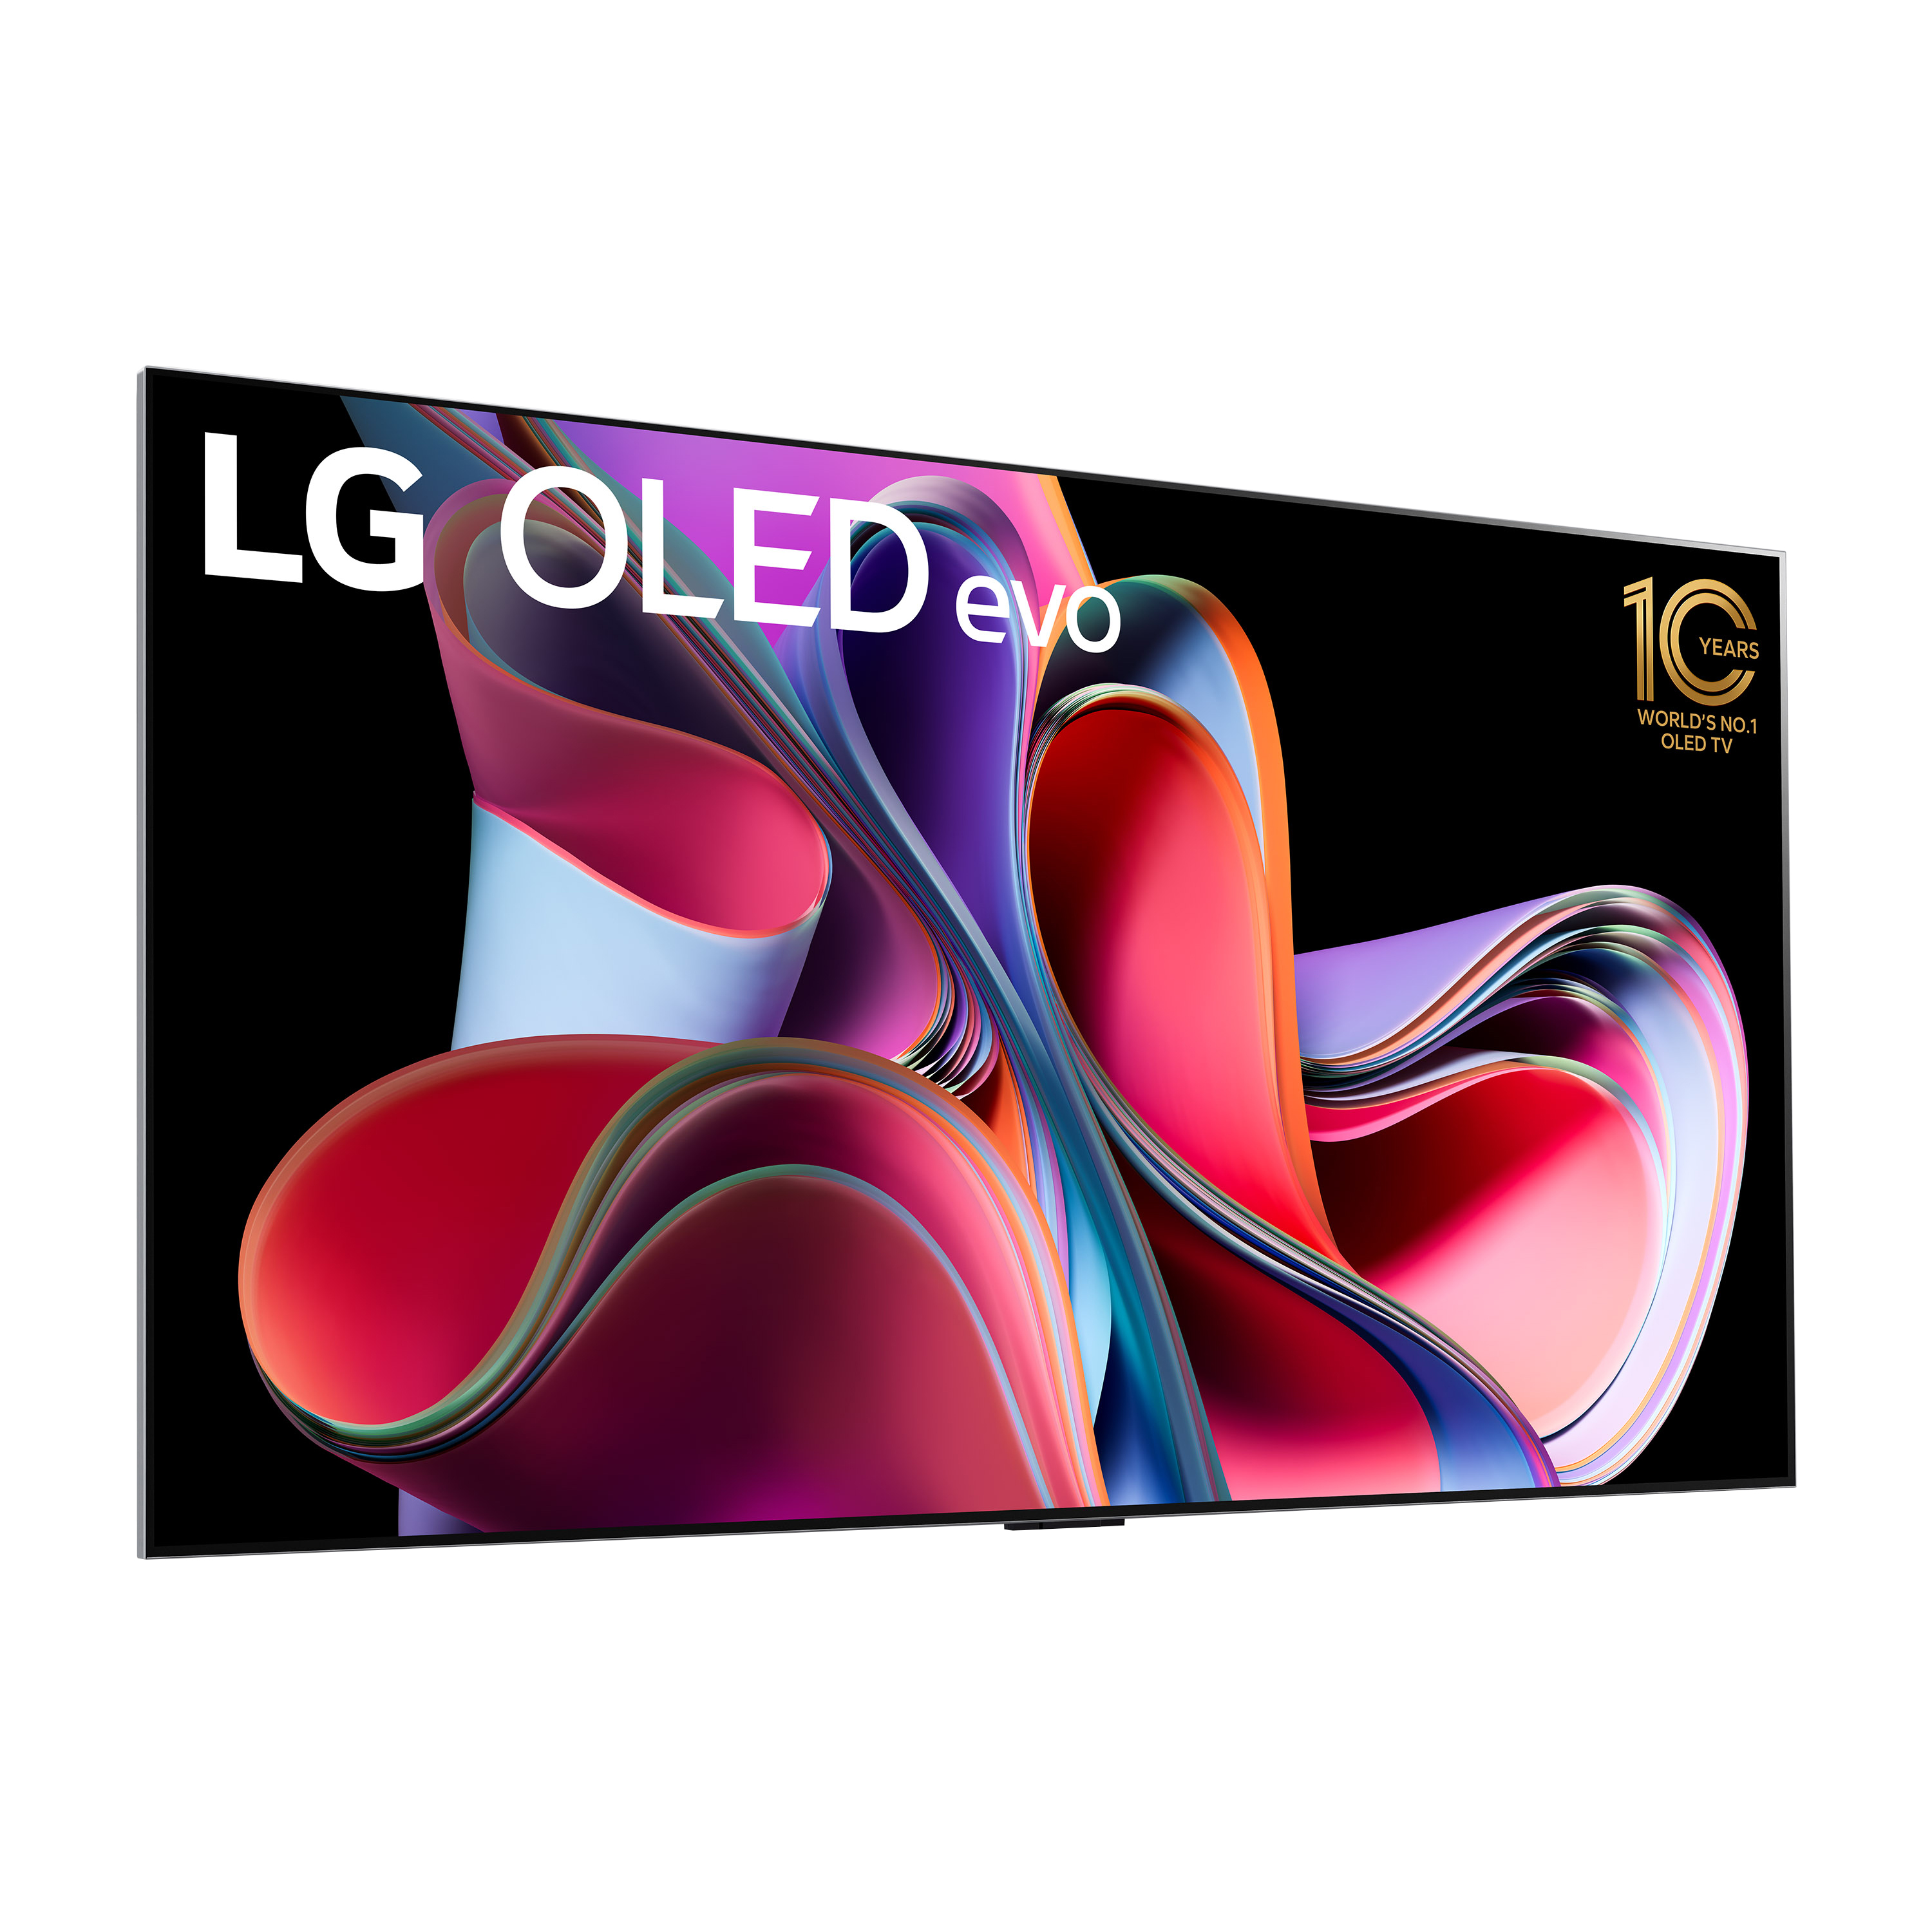 LG G3 TV on white background